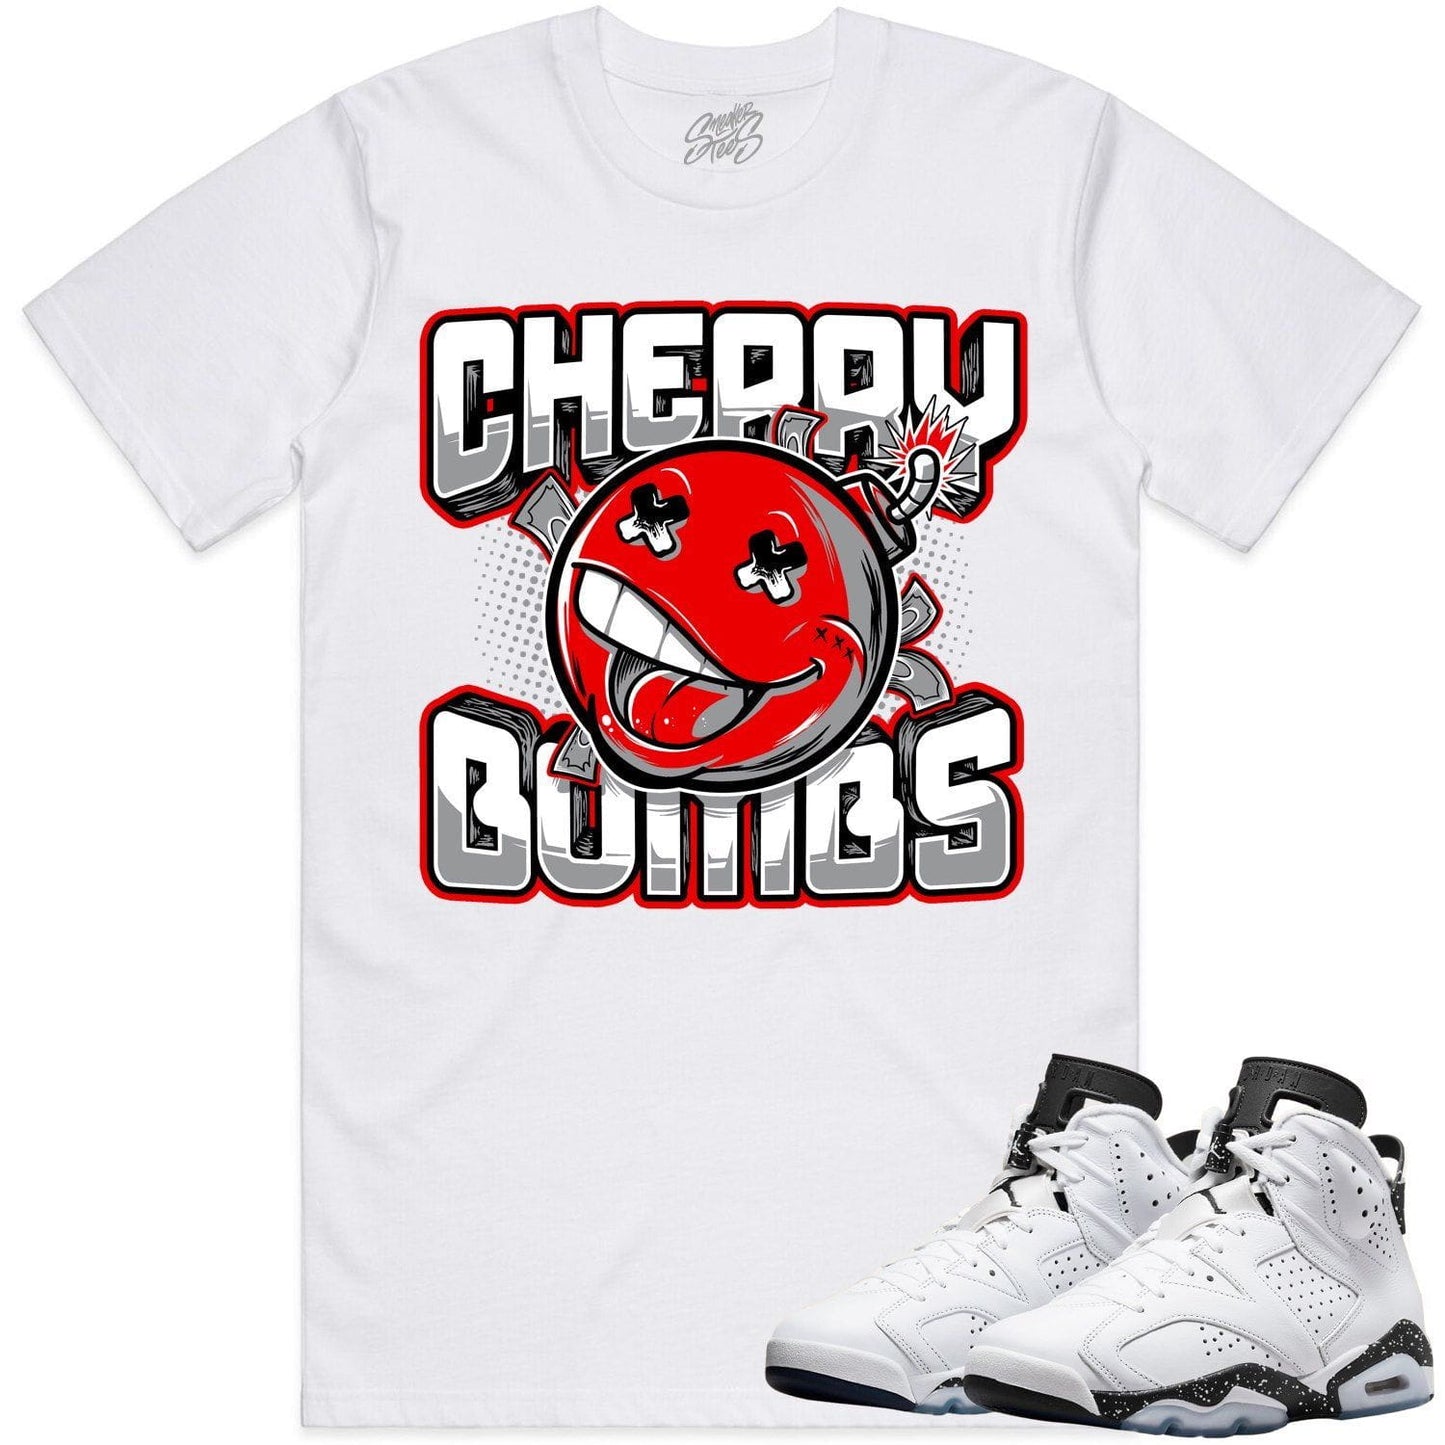 Oreo 6s Shirts - Jordan 6 Reverse Oreo 6s Sneaker Tees - Cherry Bombs